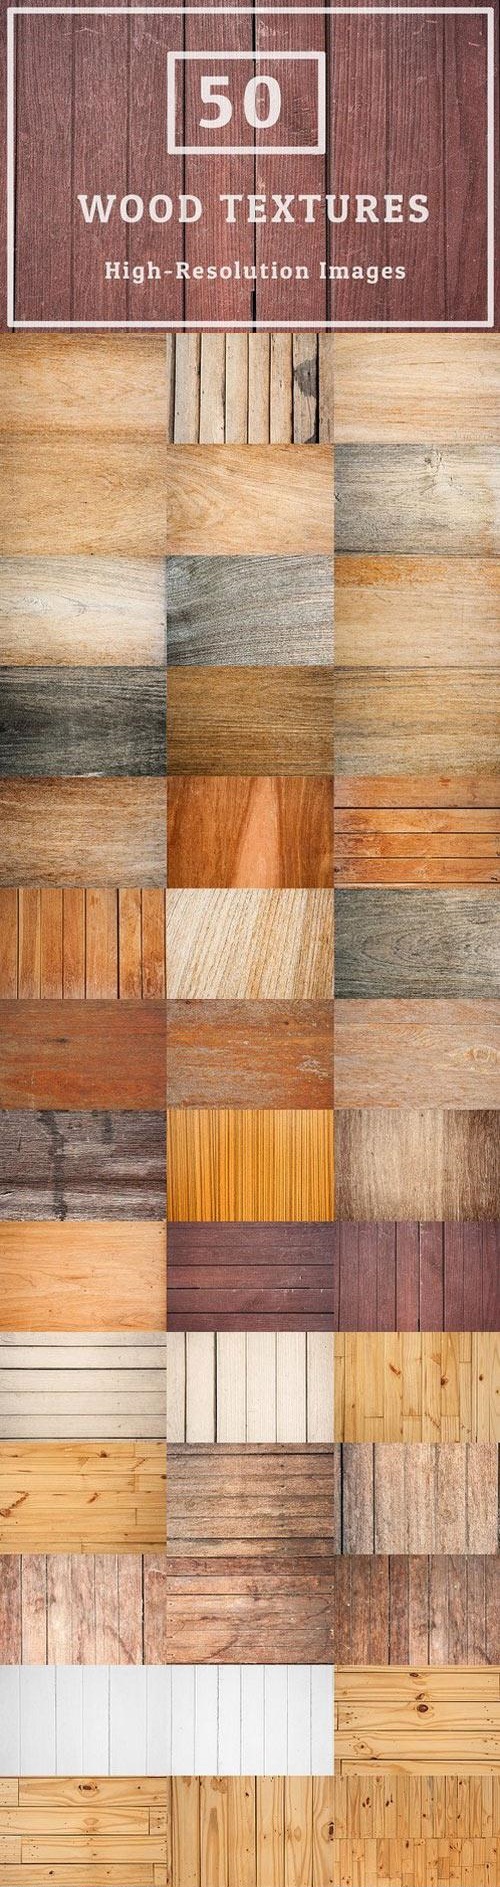 50 Wood Texture Background Set 07 623589